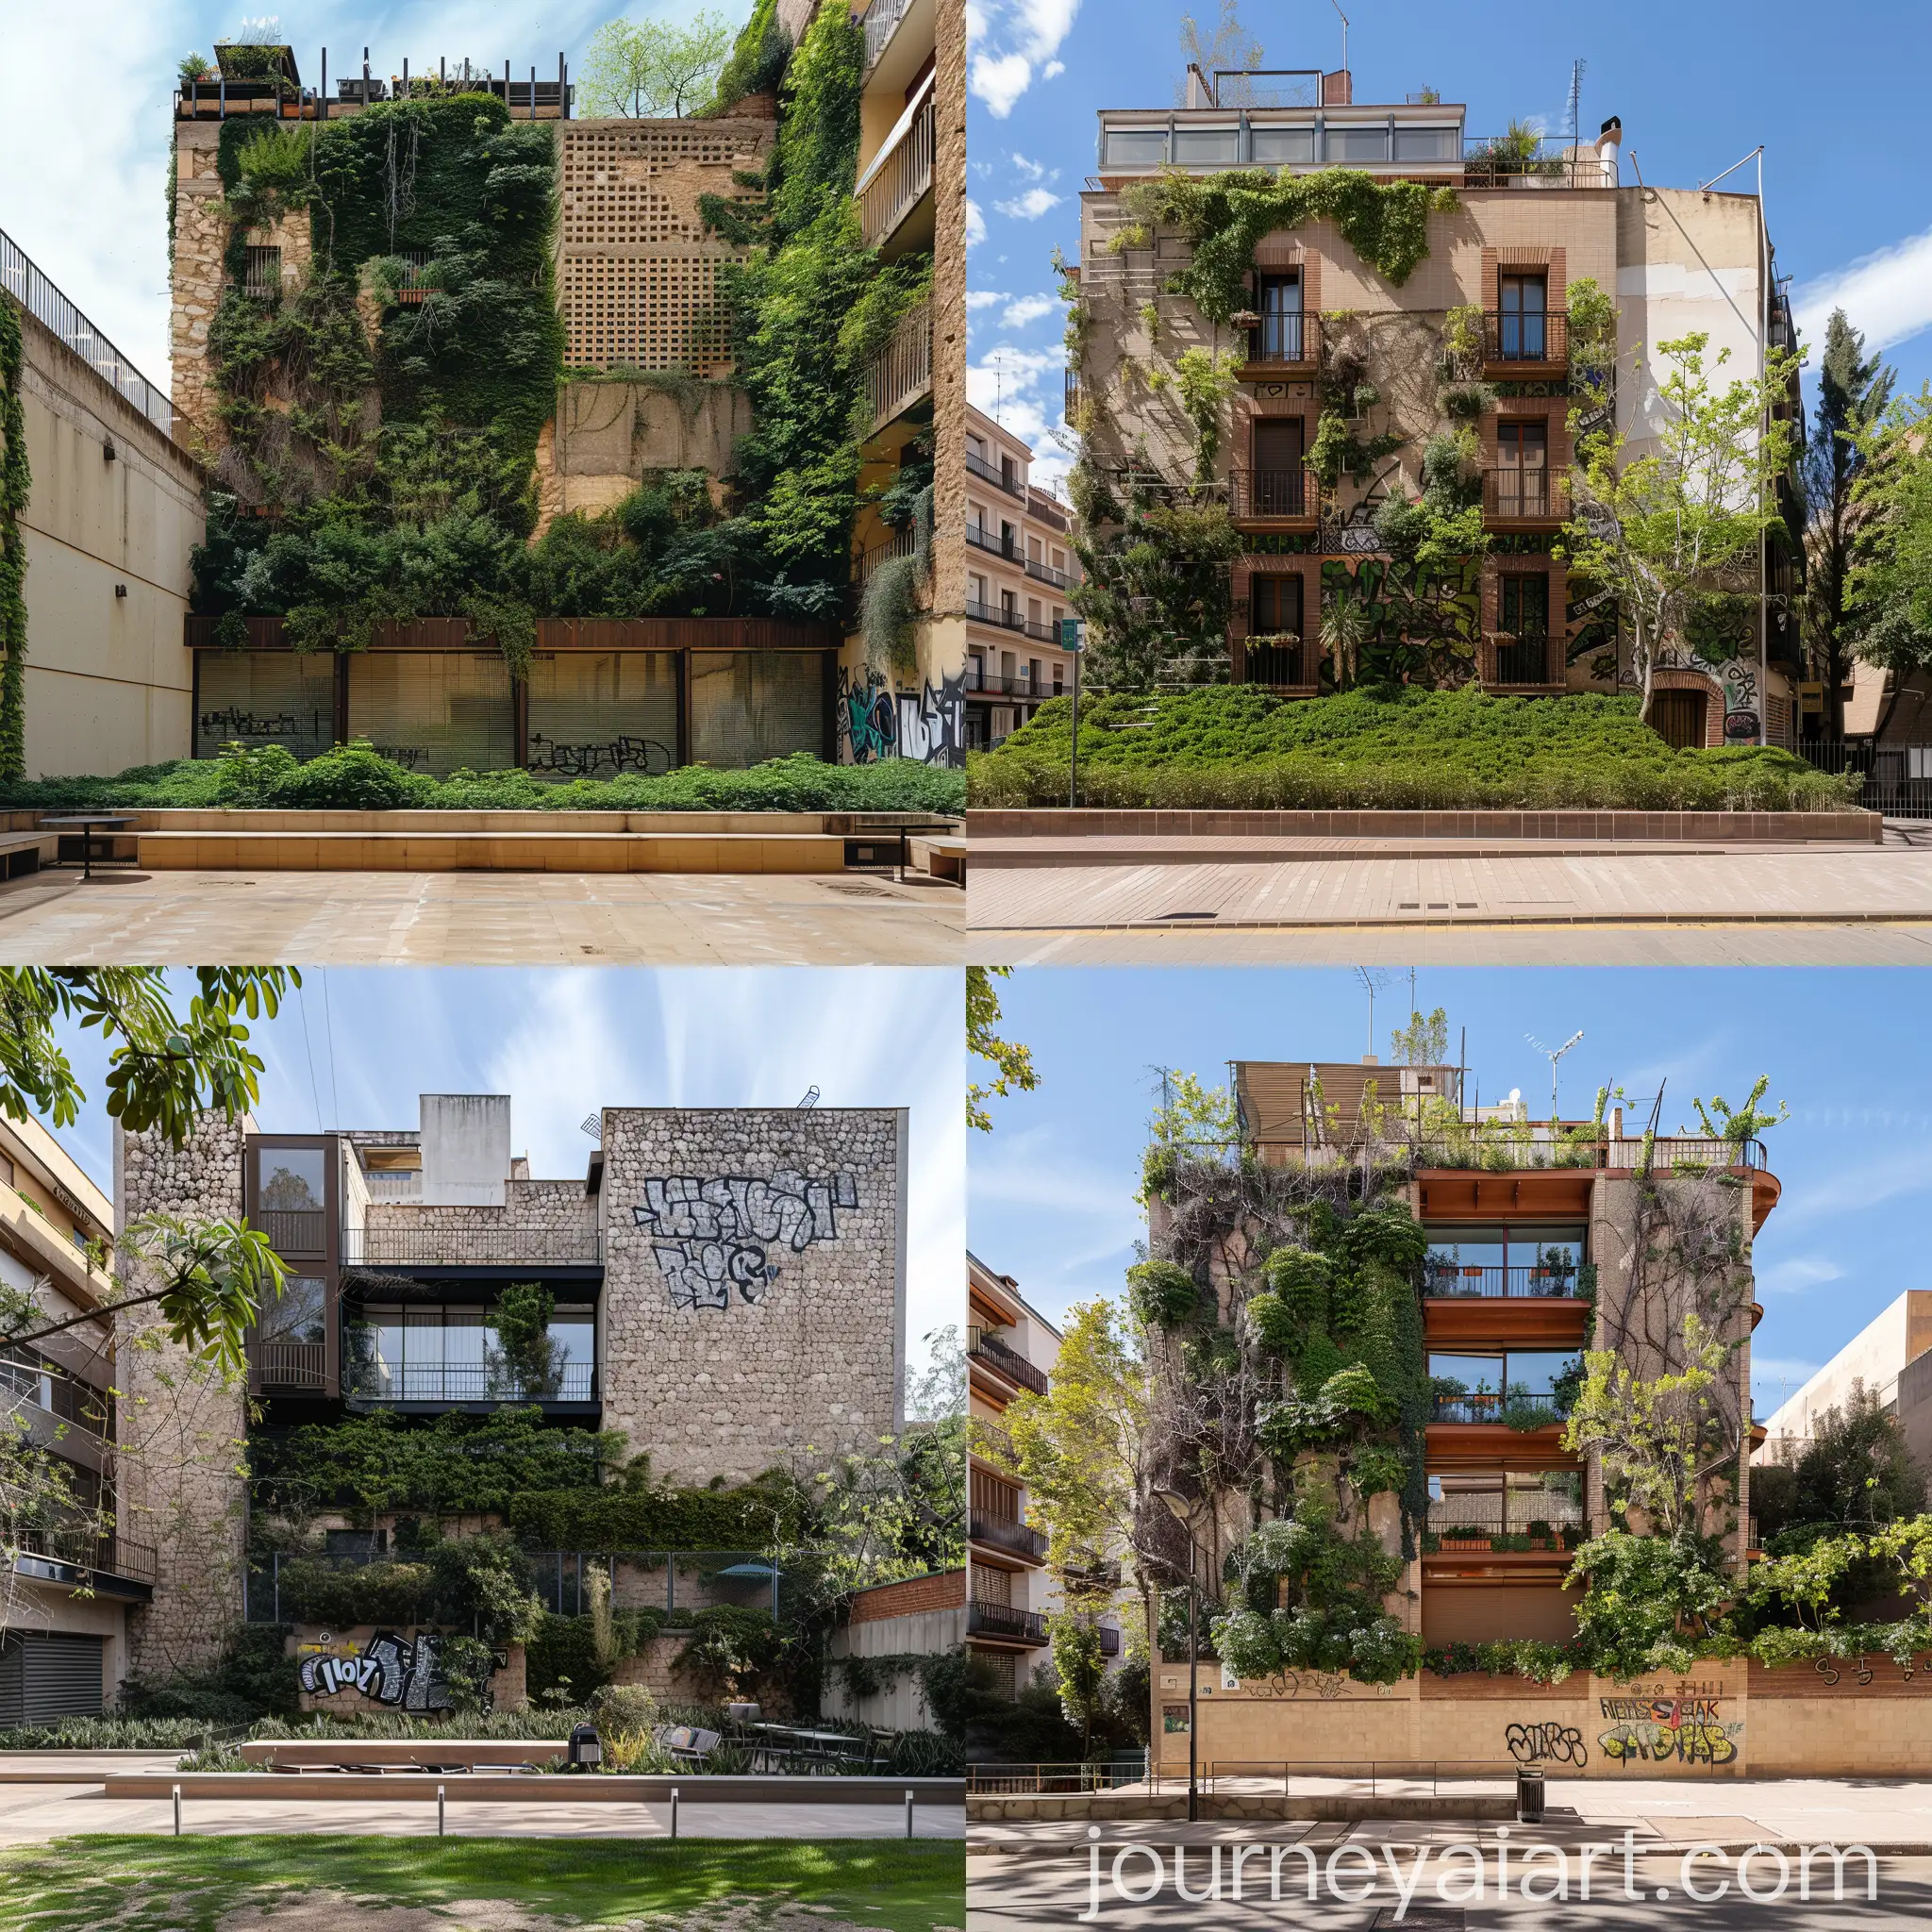 Architectural-Facade-Design-by-Jose-Luis-Sert-with-Vertical-Garden